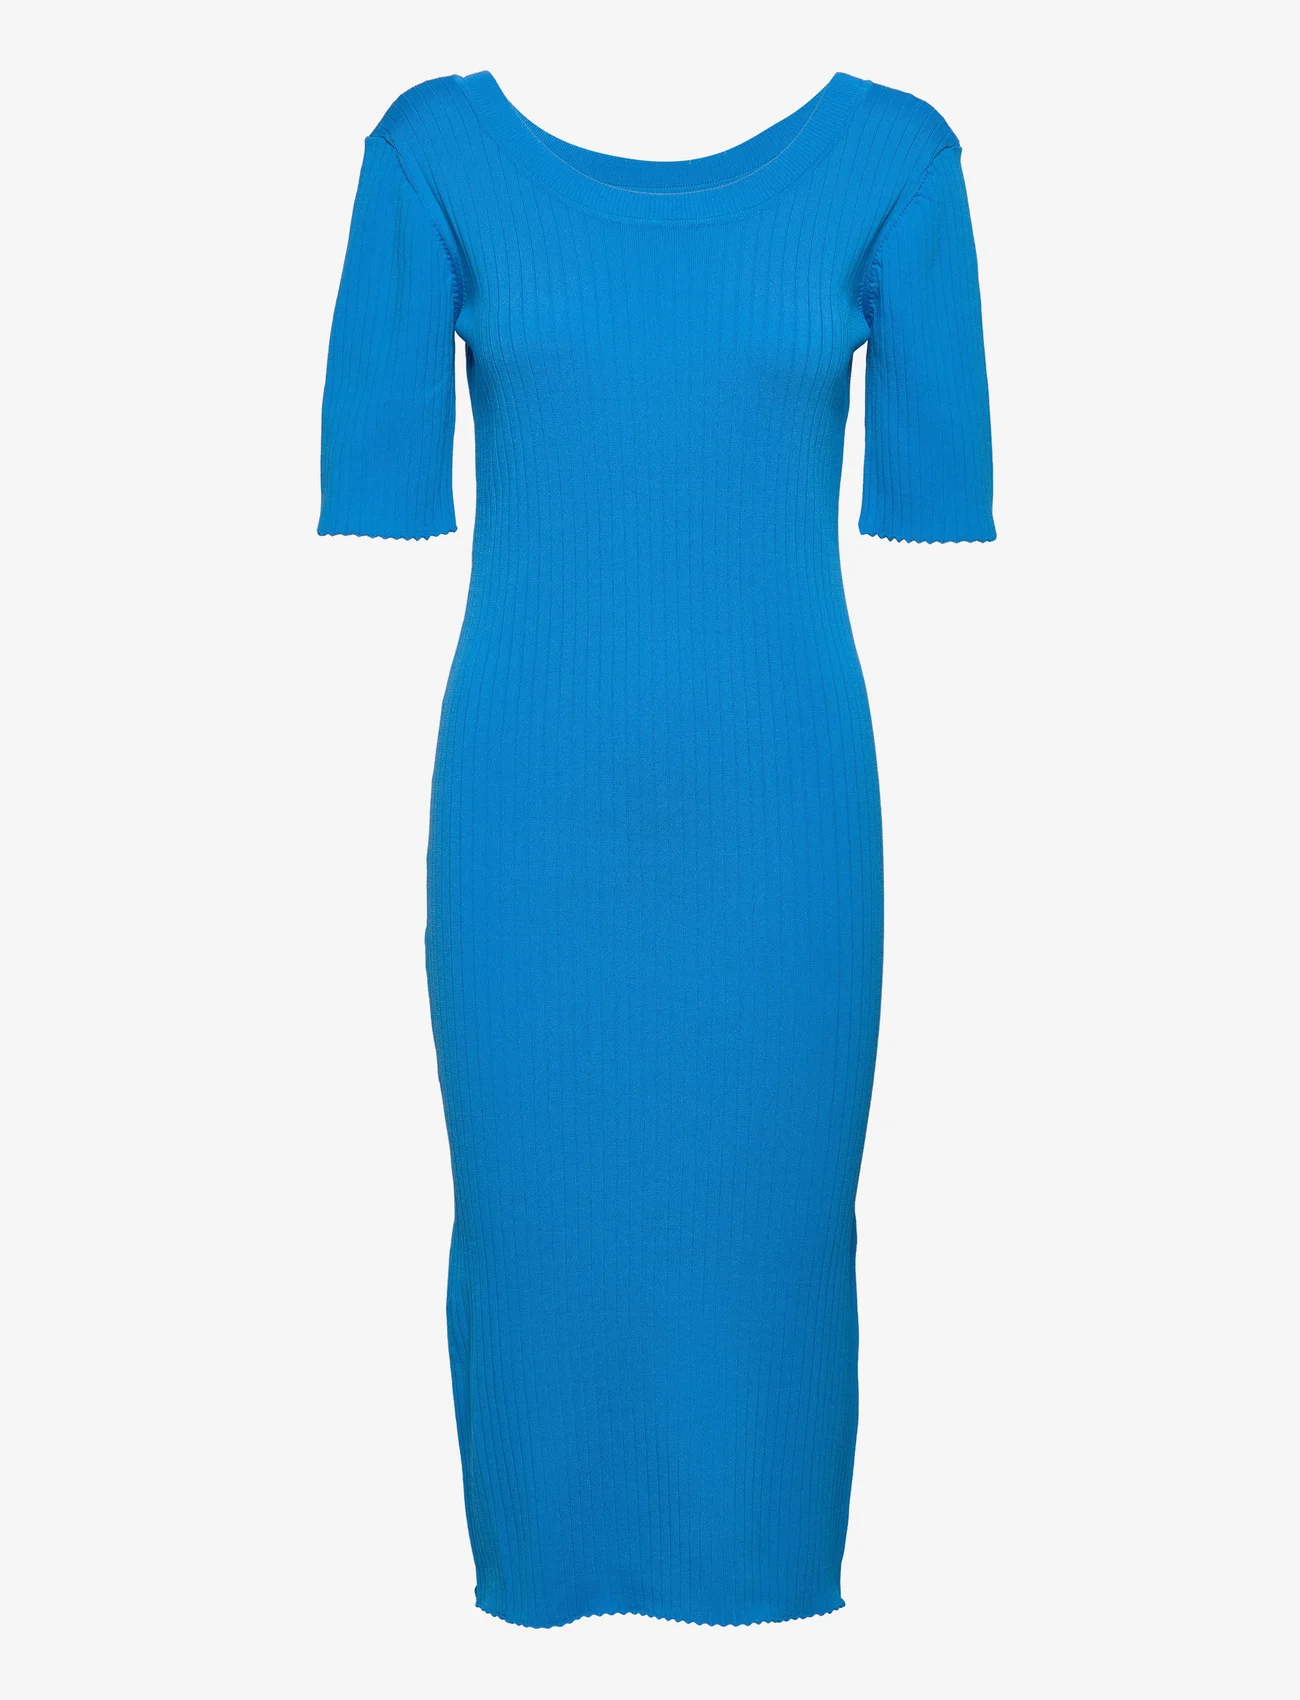 Just Female - Fresh dress - bodycon dresses - malibu blue - 0